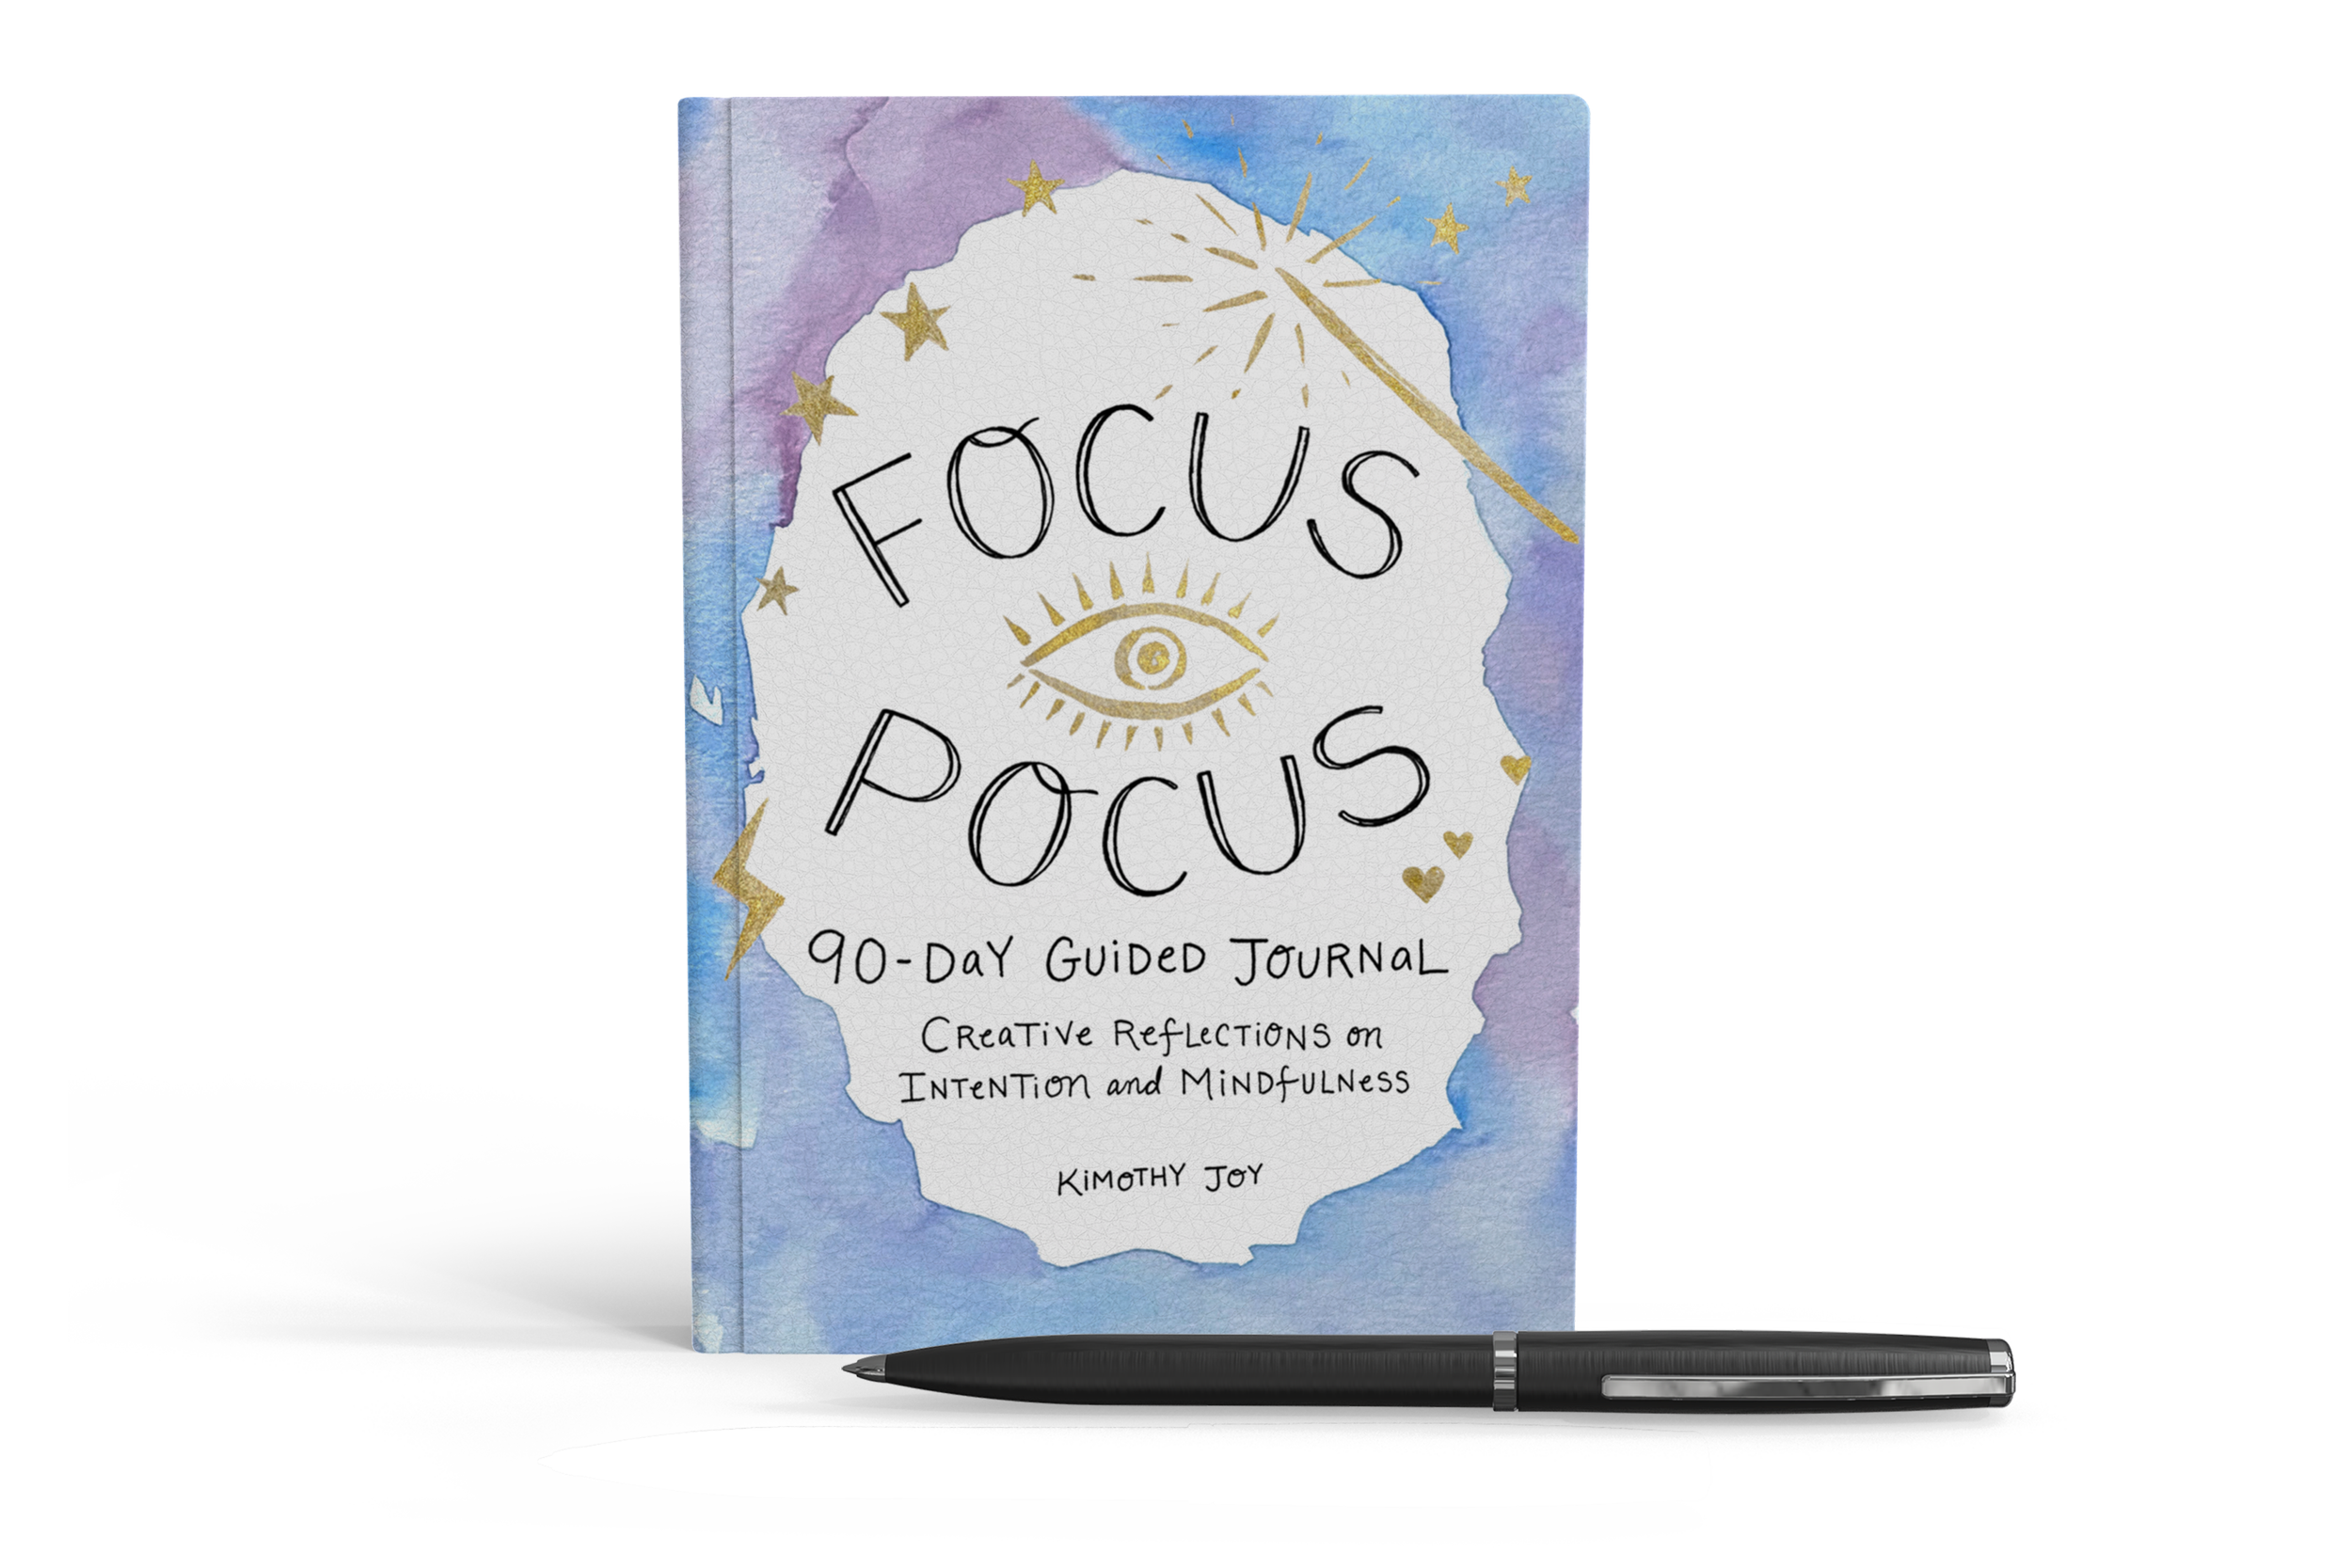 focus+pocus+journal.png